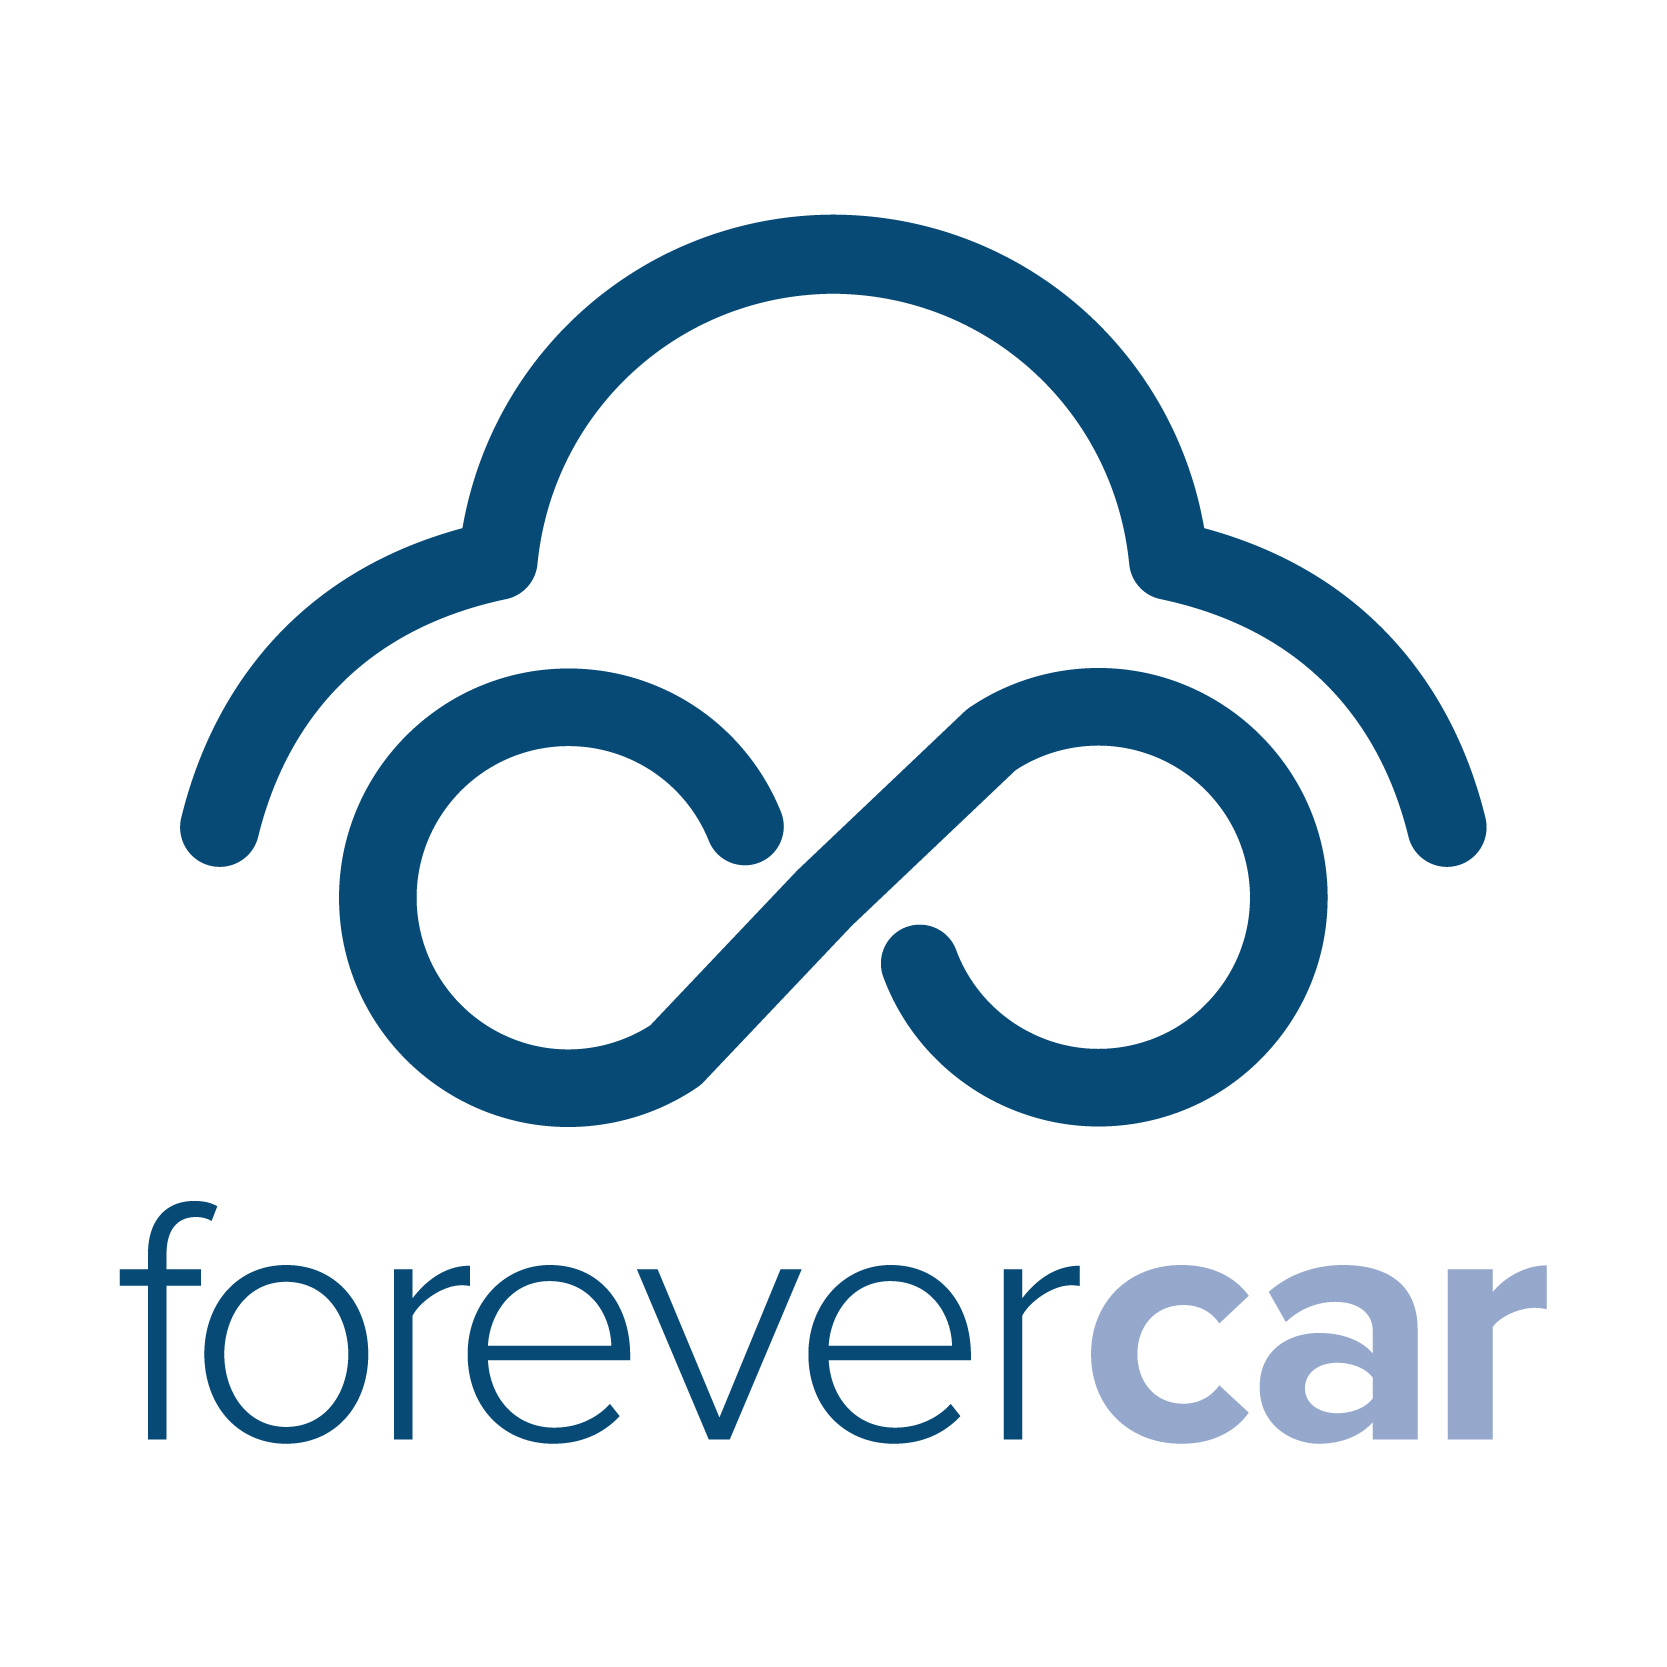 Forever Car Logo - Benefits | ForeverCar Vehicle Service Plans